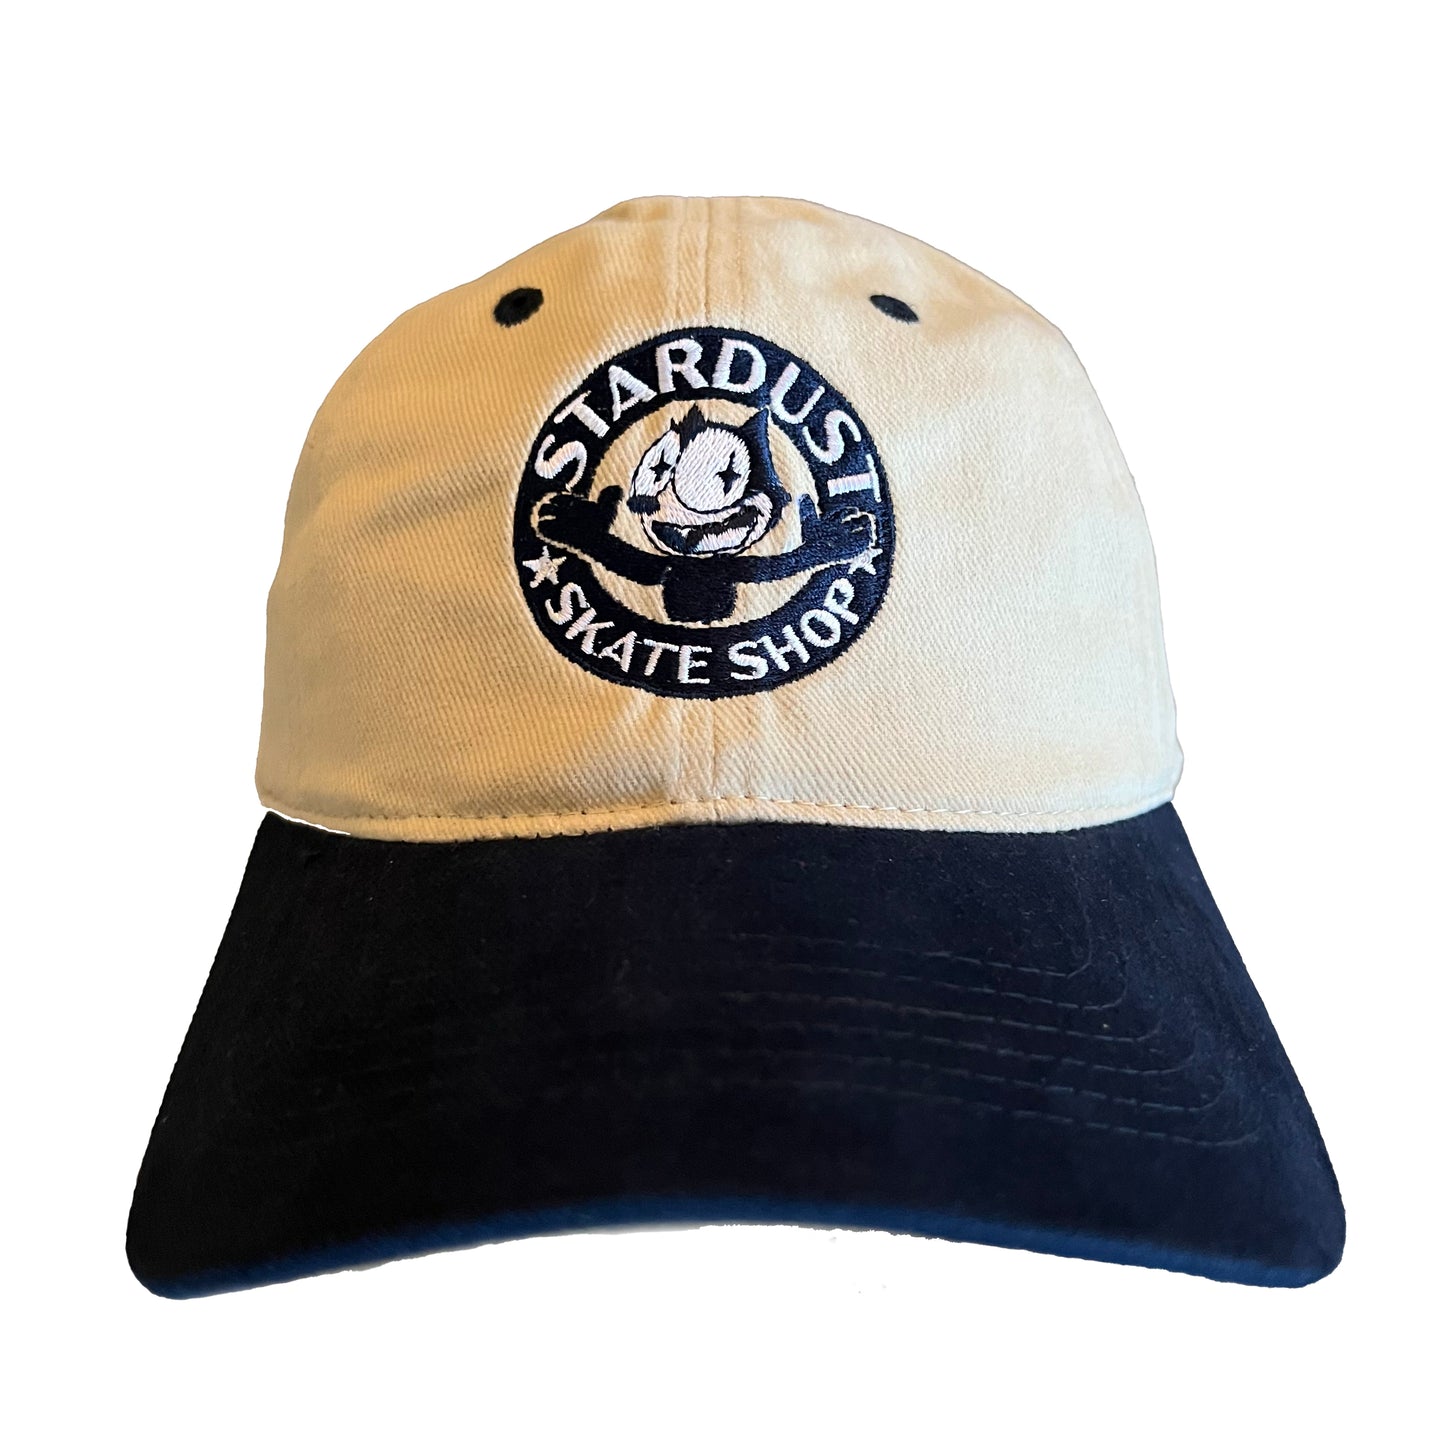 Stardust Skate Shop Felix Dad Hat 002 Khaki / Navy / White